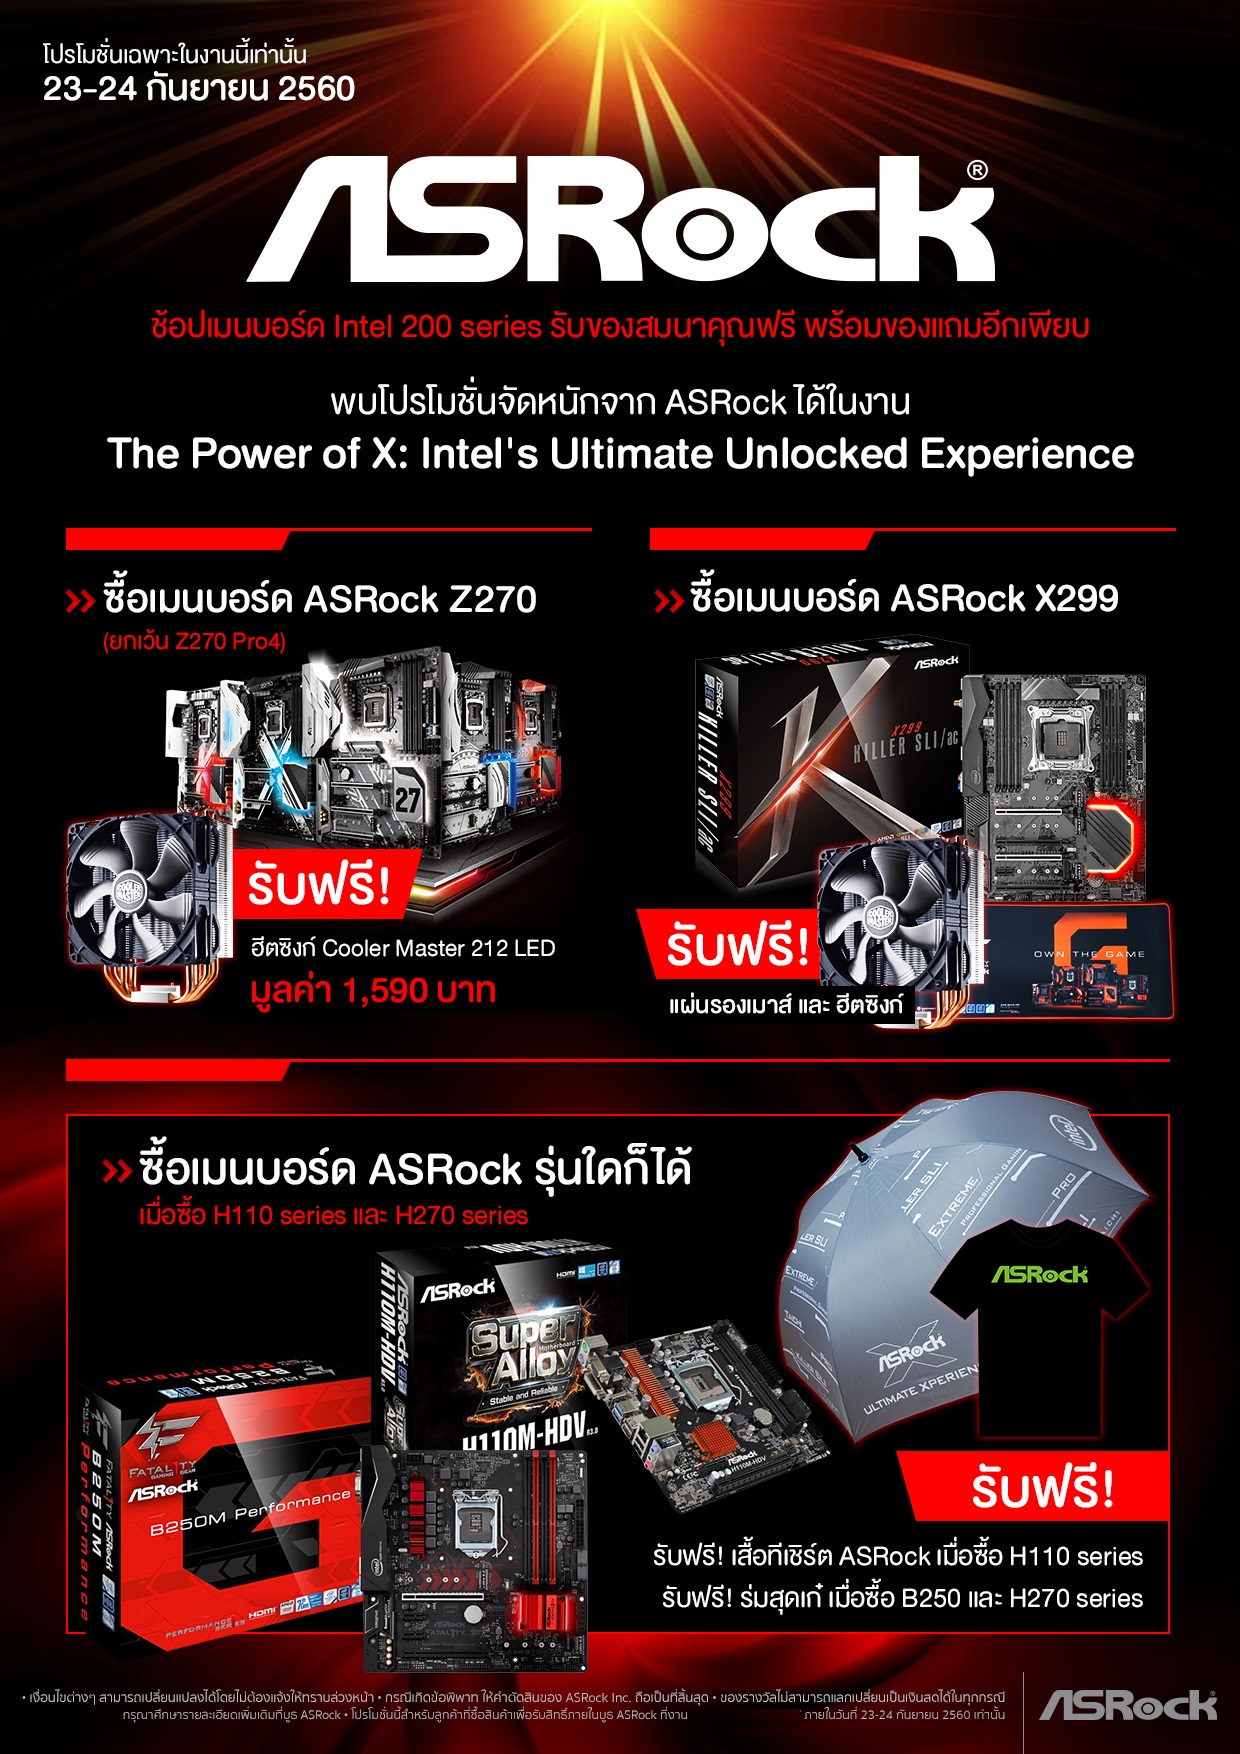 asrock the power of x ASRock อัดโปรฯ จัดหนัก ซื้อเมนบอร์ดรับของแถมสุดพรีเมียม ในงาน The Power of X: Intels Ultimate Unlocked Experience